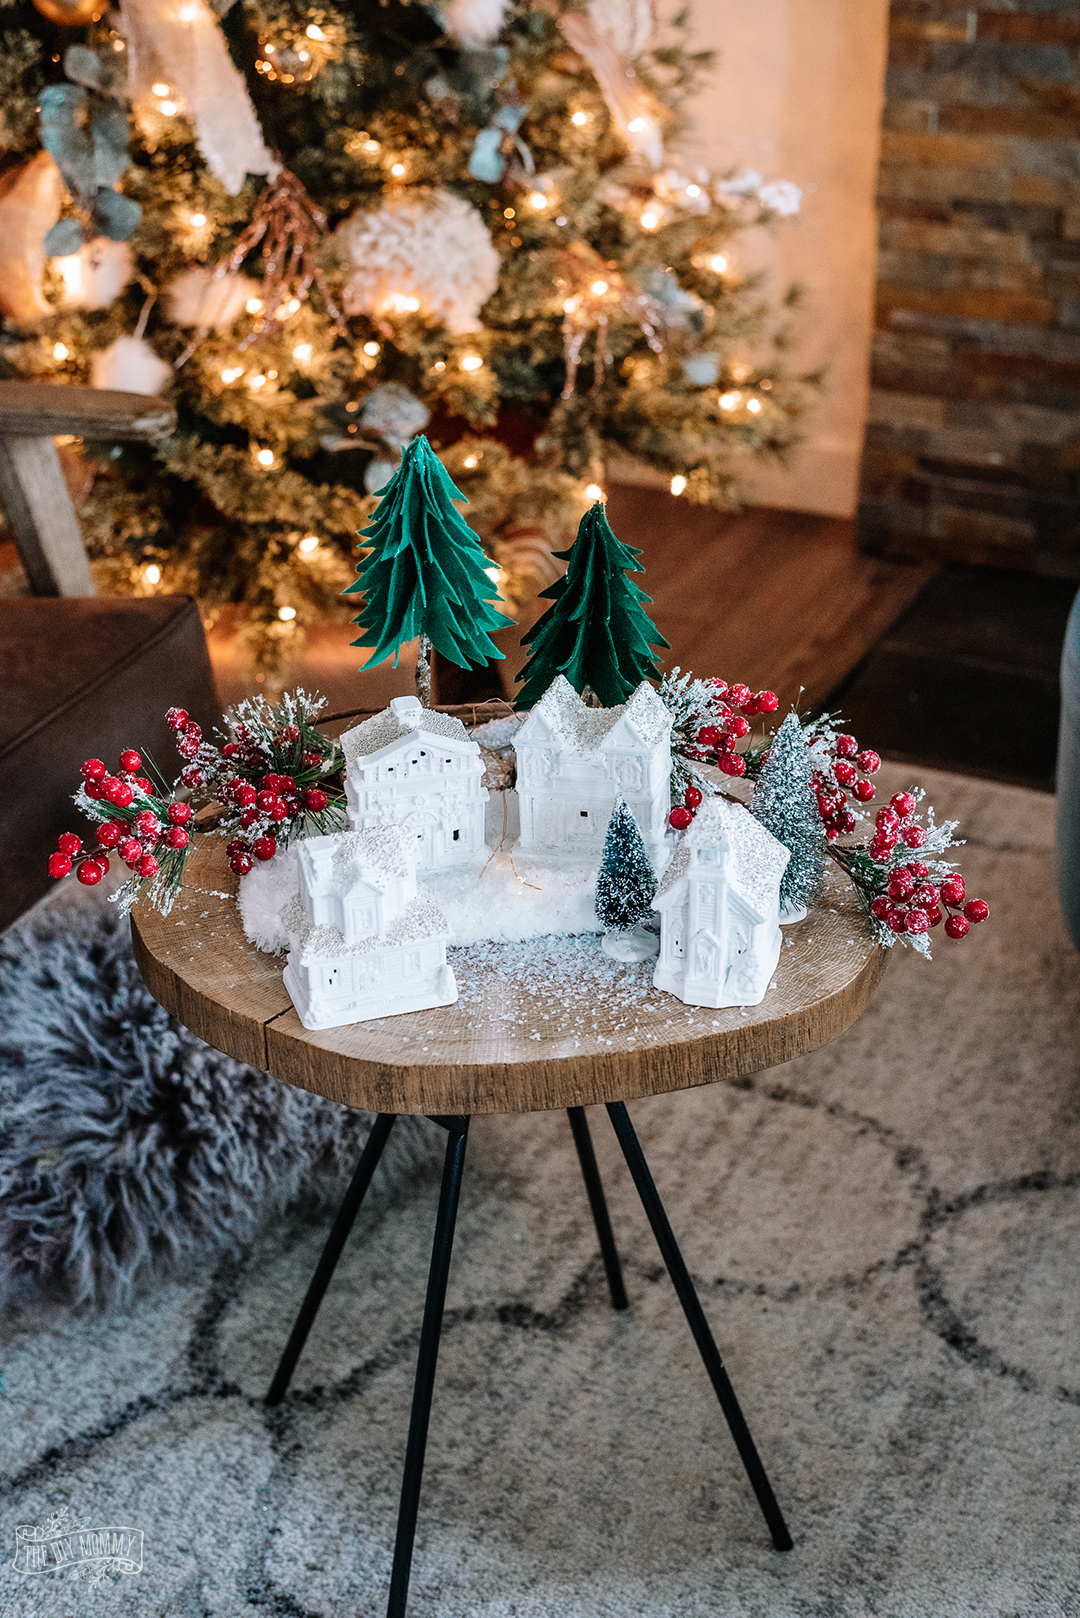 DIY Dollar Tree Christmas Village tutorial - so easy and inexpensive & looks so elegant!